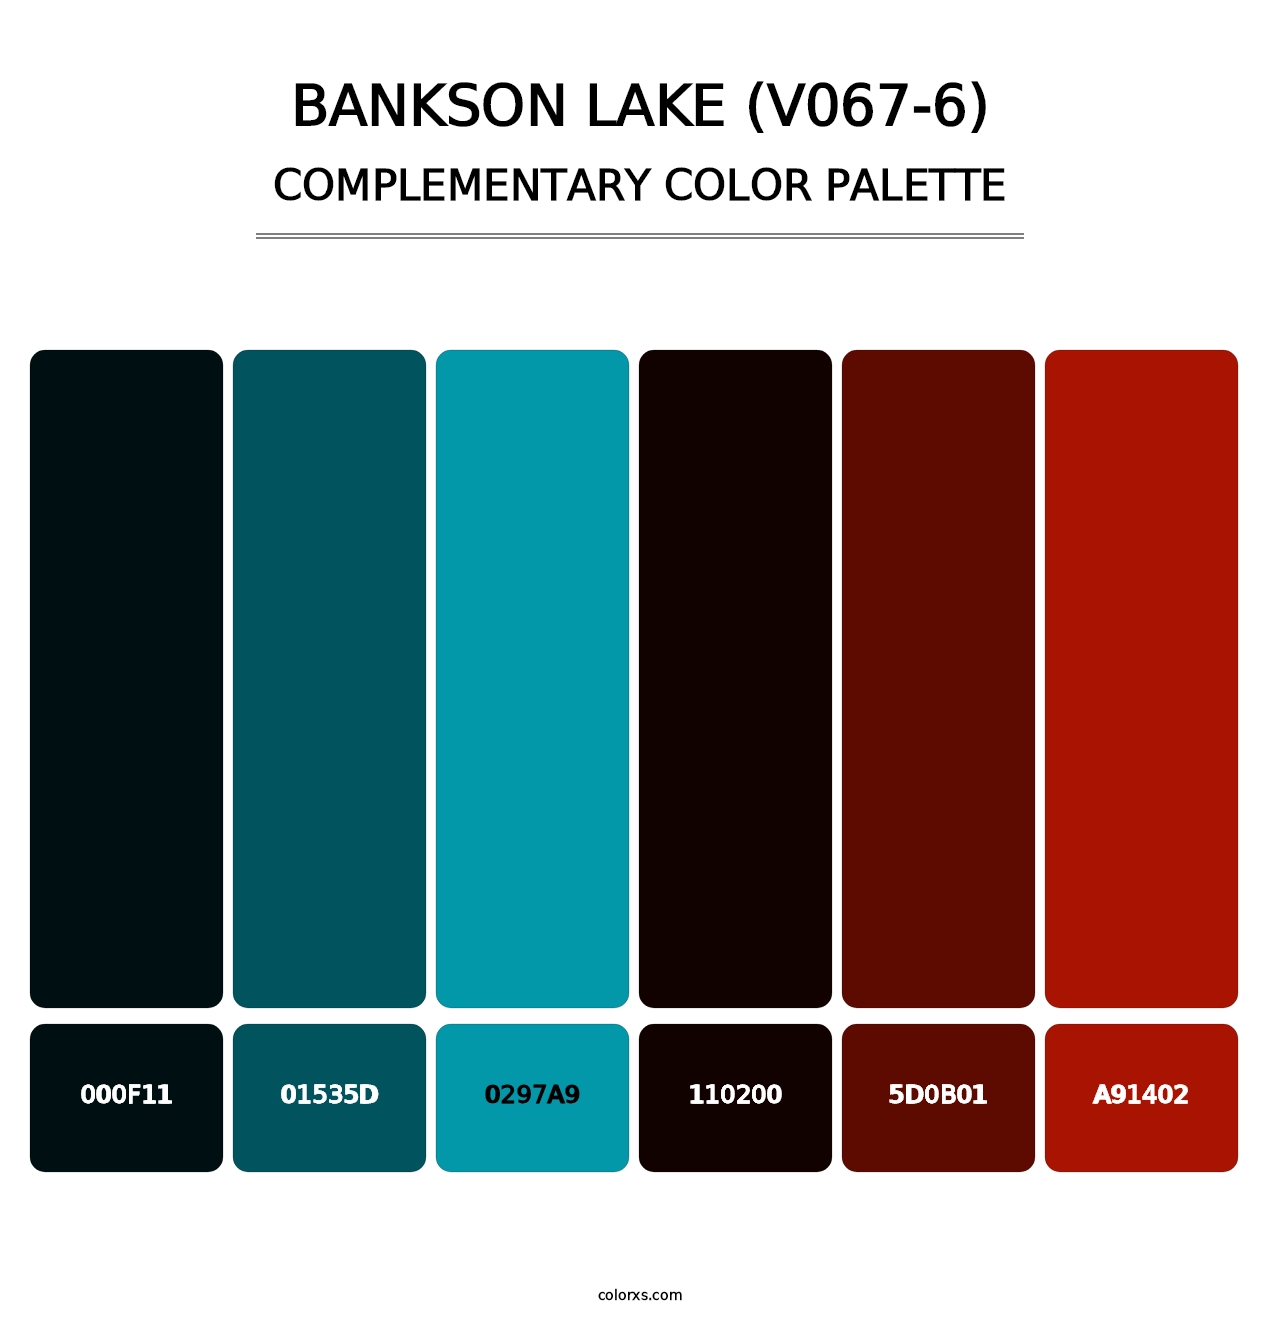 Bankson Lake (V067-6) - Complementary Color Palette